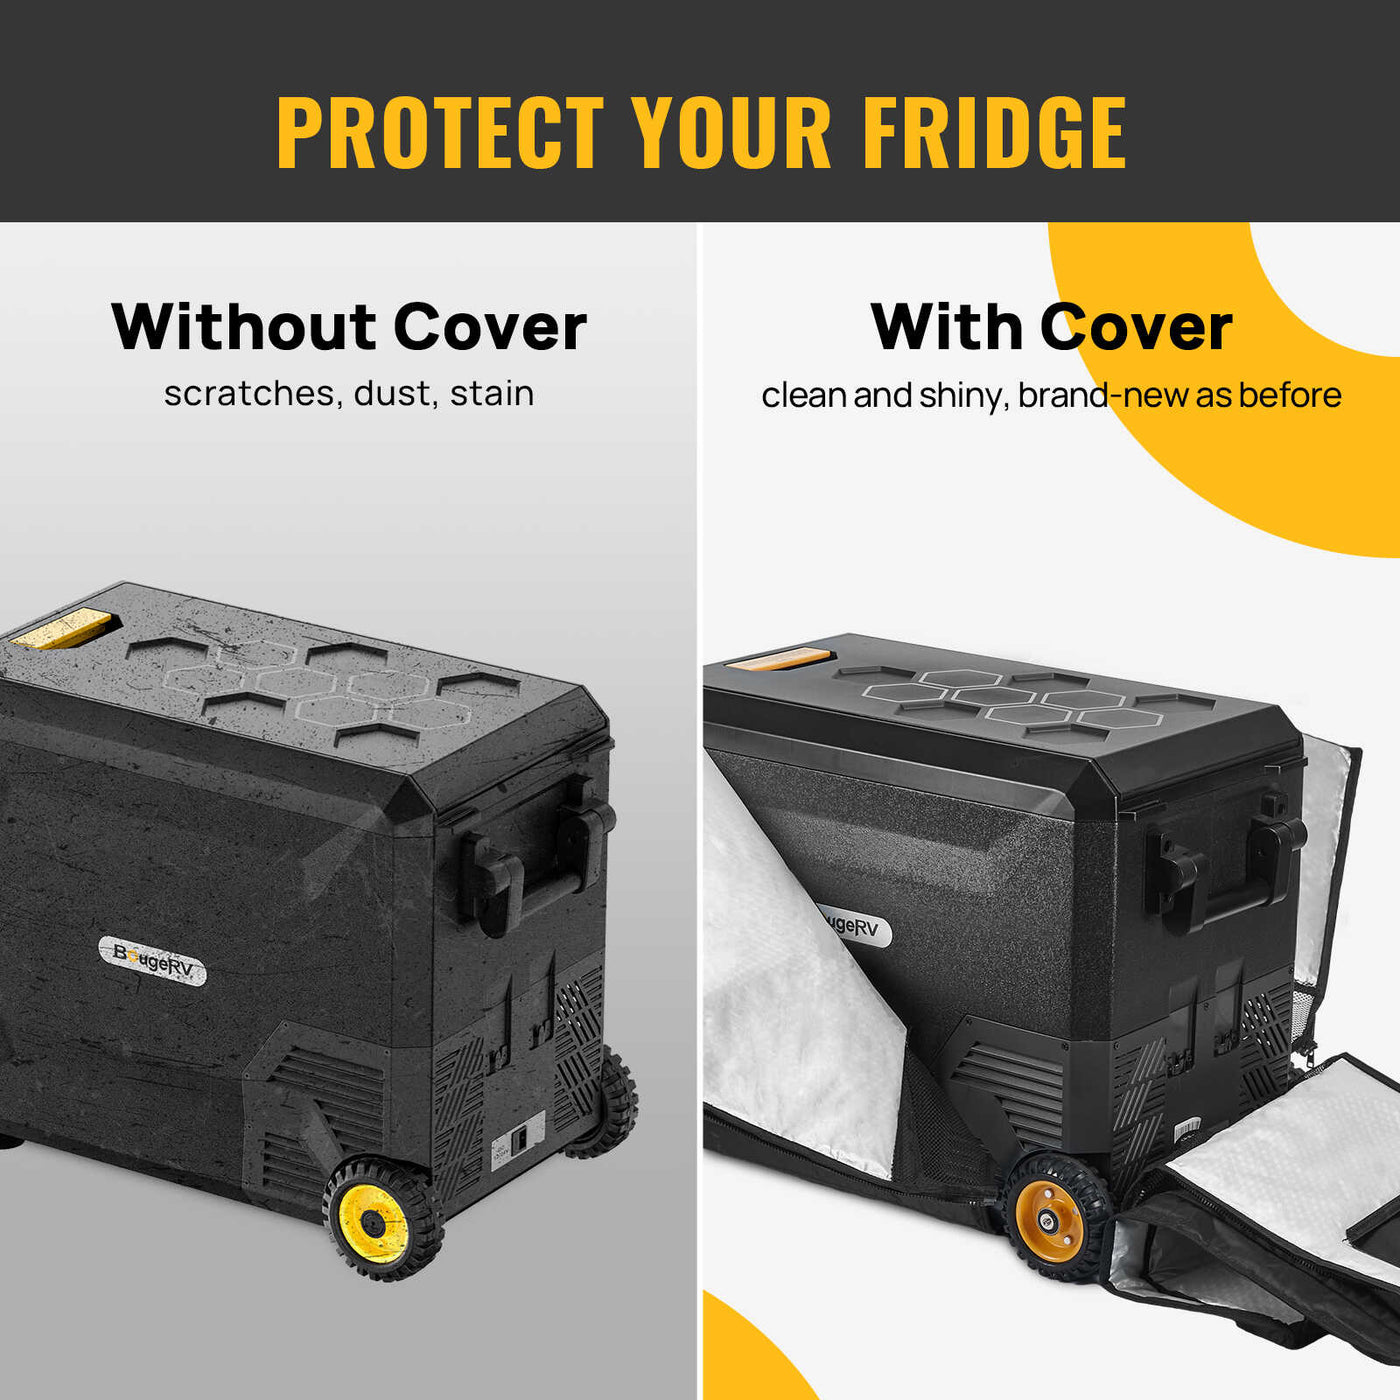 ASPEN&ASPEN PRO 43 Quart Refrigerator Insulated Protective Cover